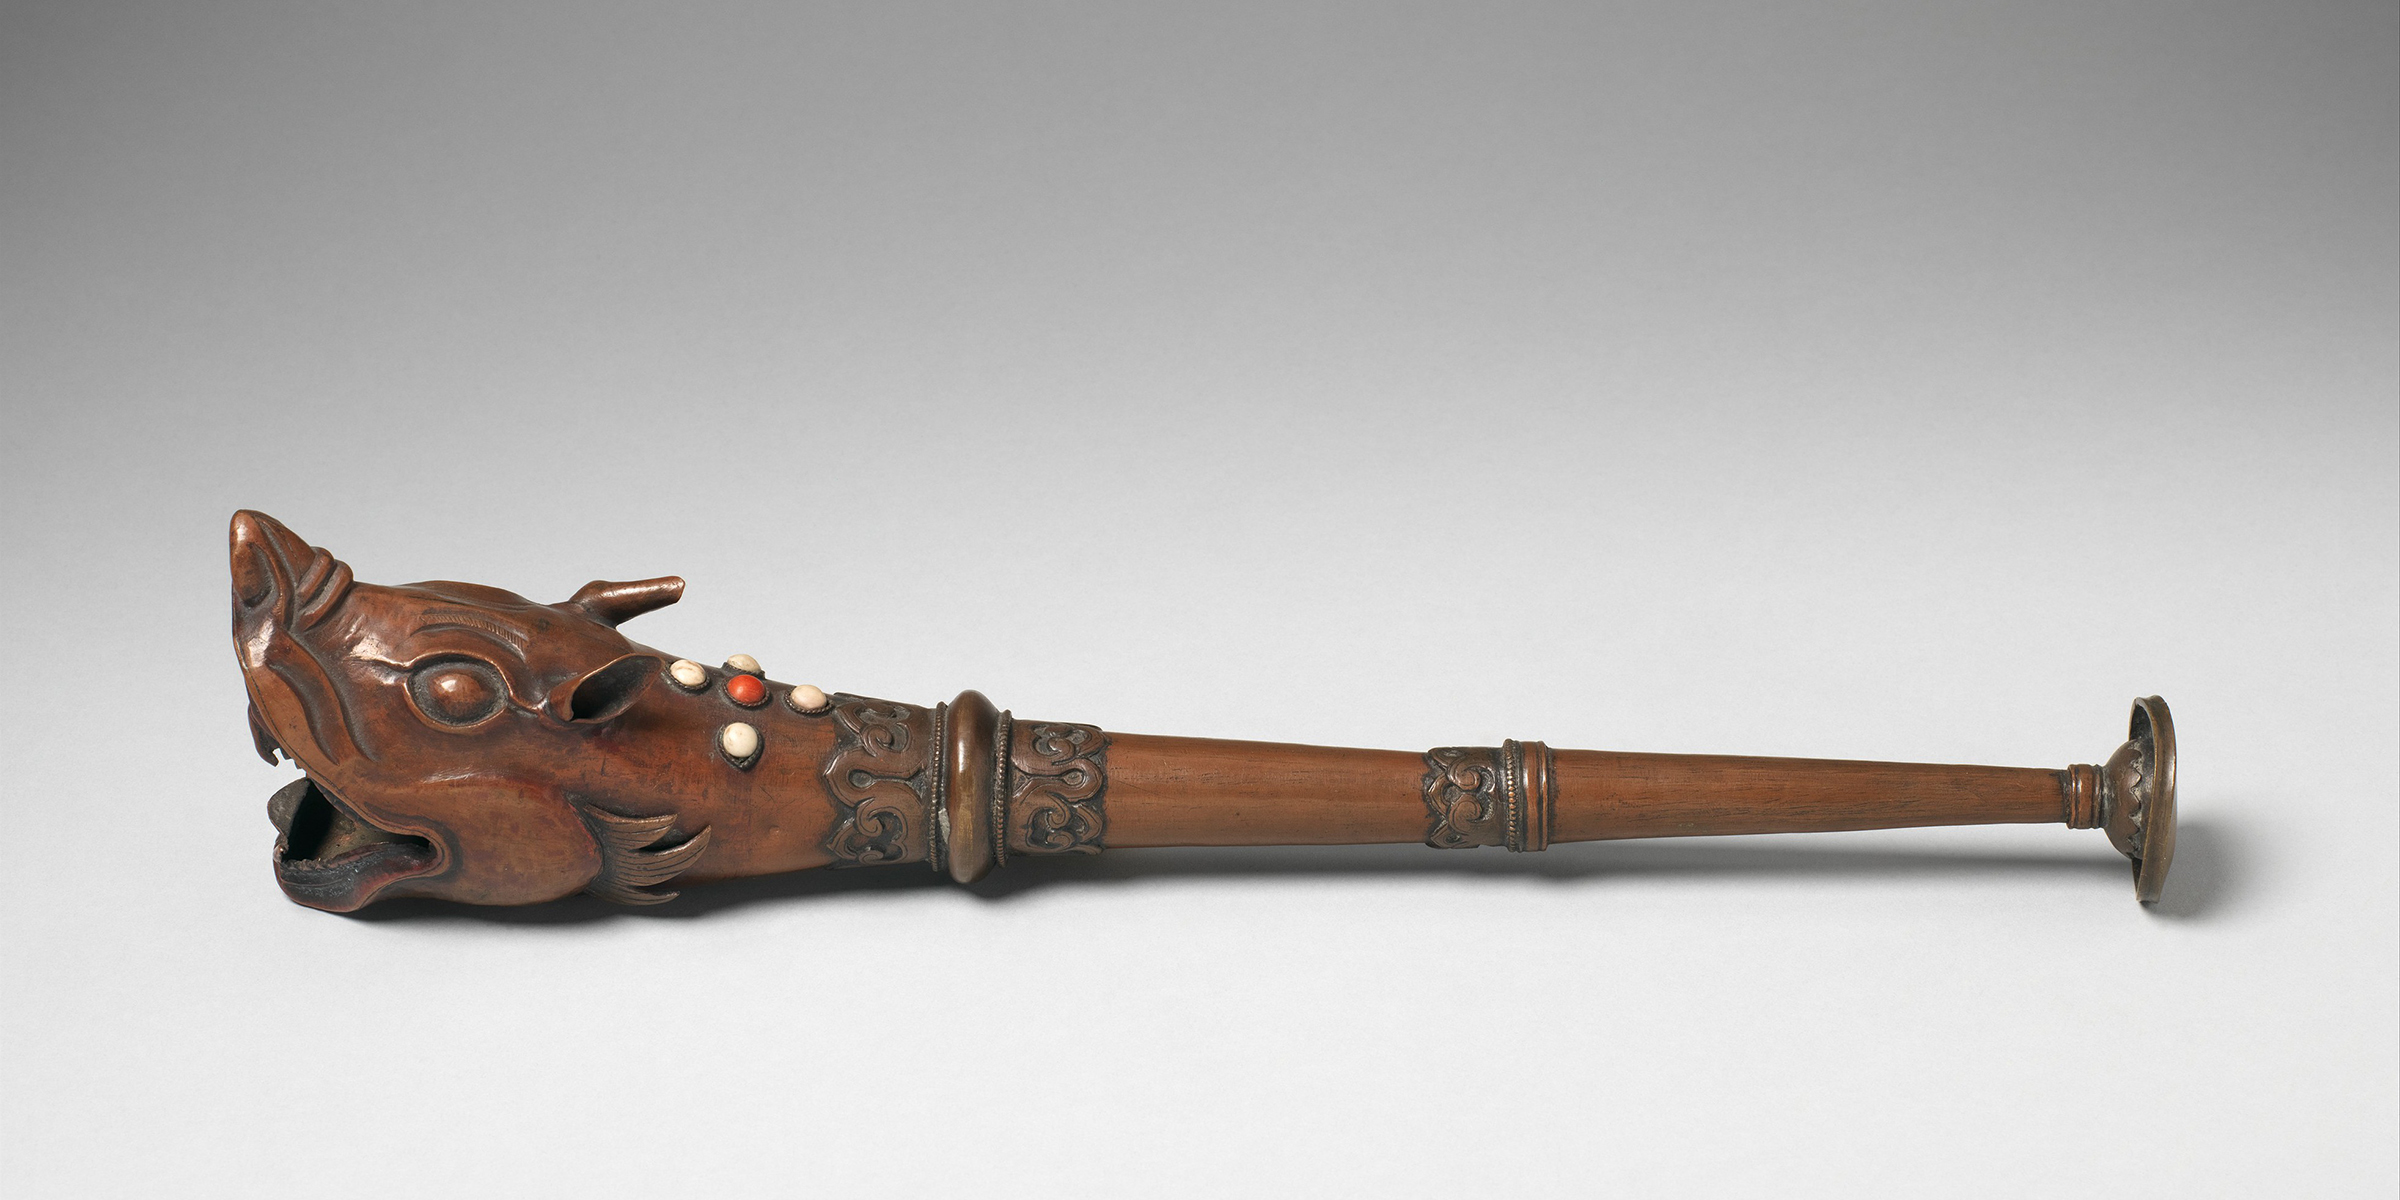 Leg-bone flute, Tibet, nineteenth century